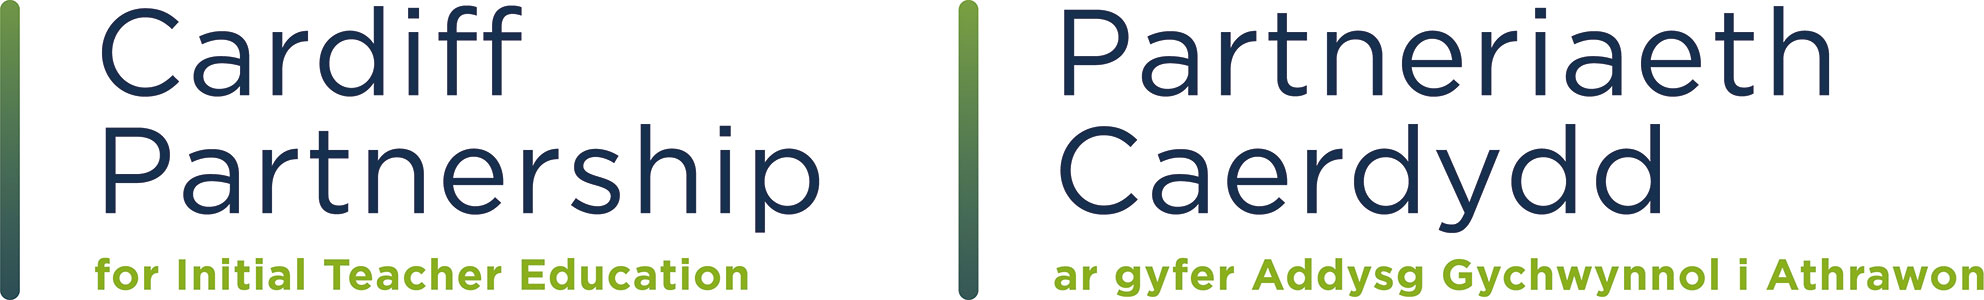 Logo - Cardiff Partnership for Initial Teacher Education